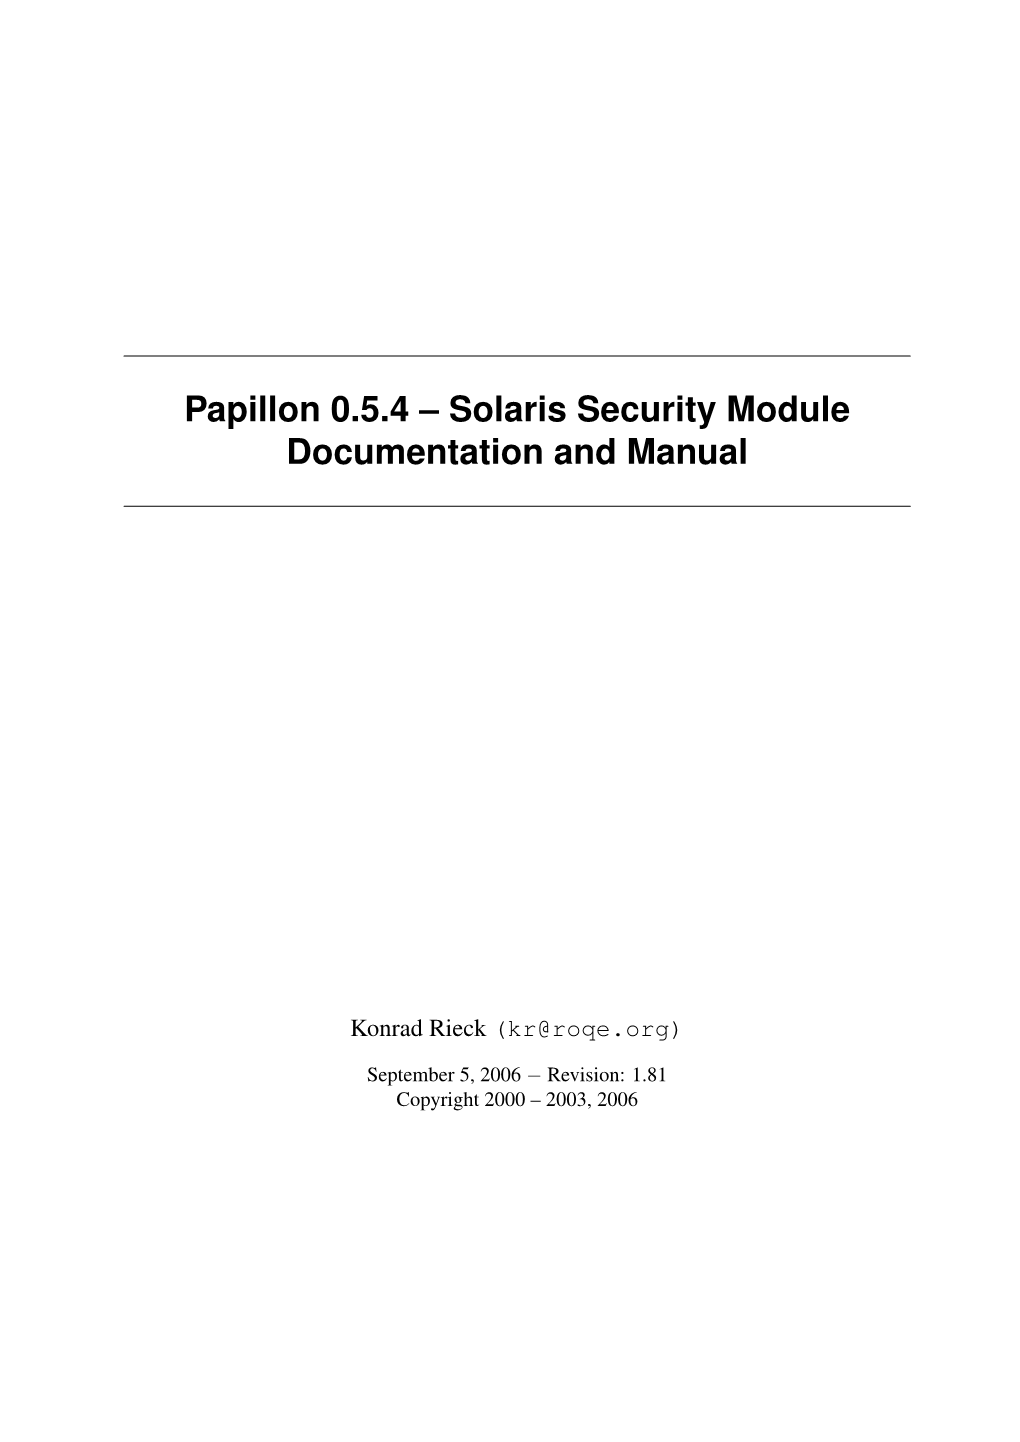 Papillon 0.5.4 – Solaris Security Module Documentation and Manual